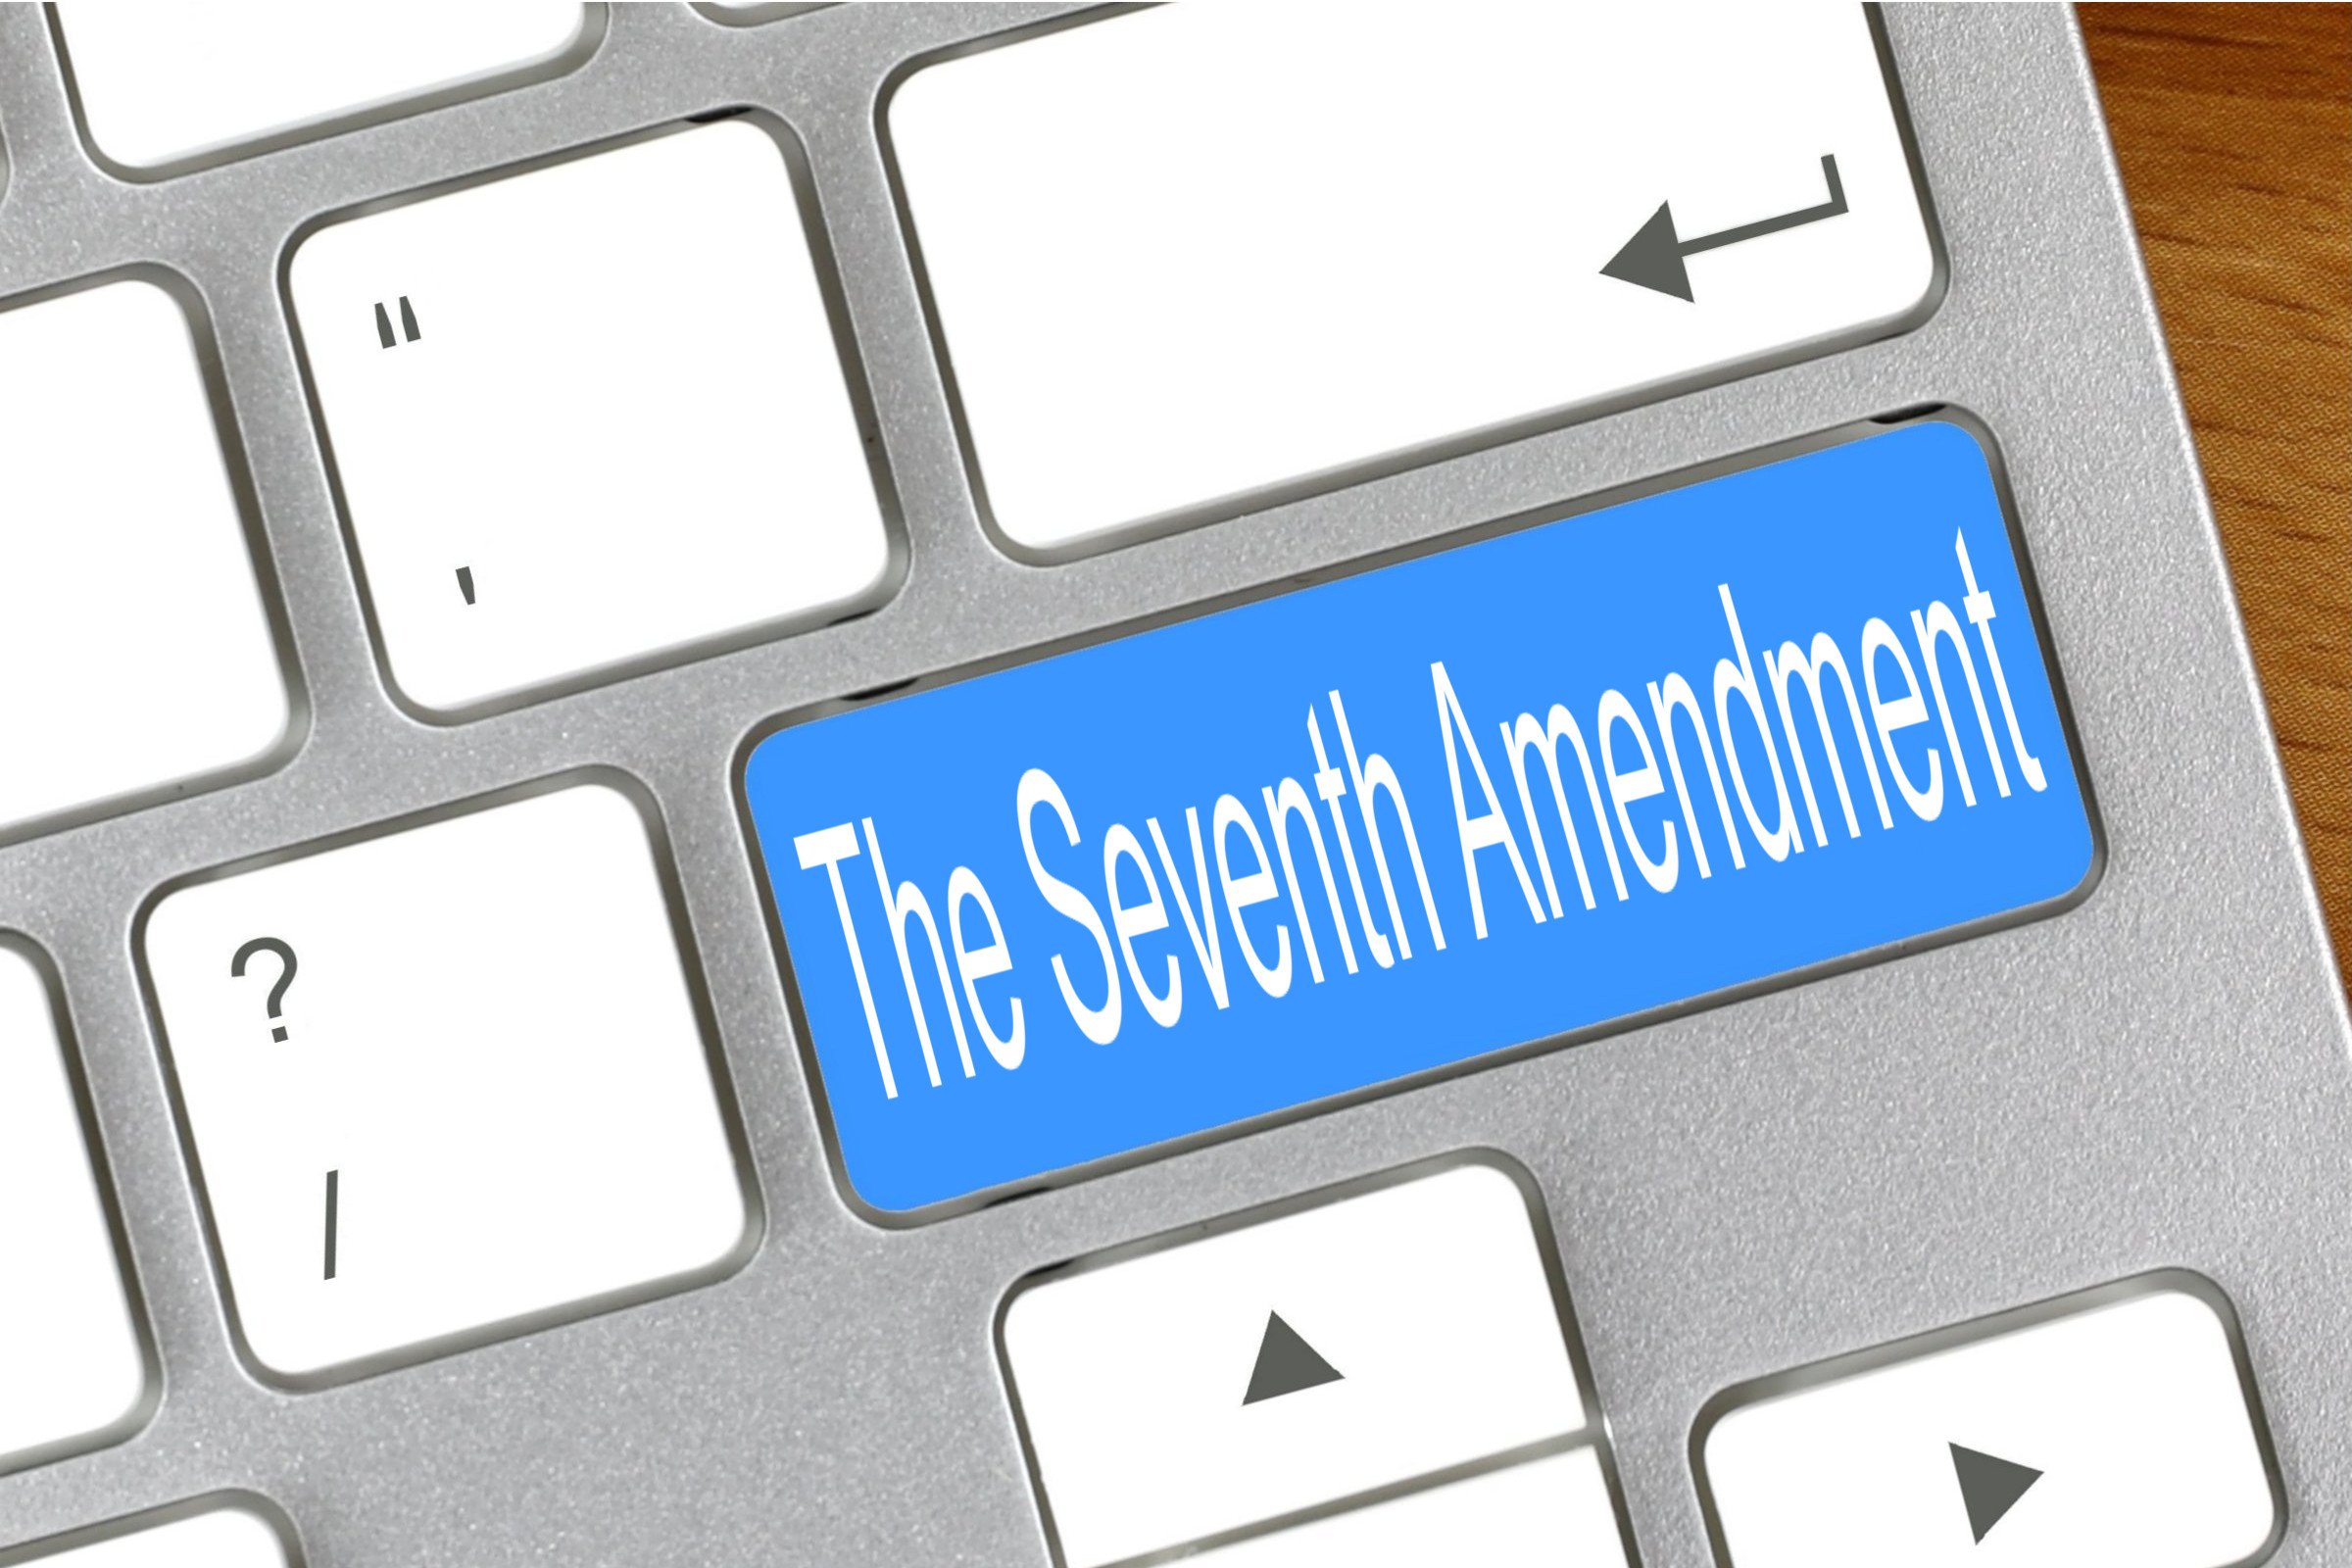 the seventh amendment